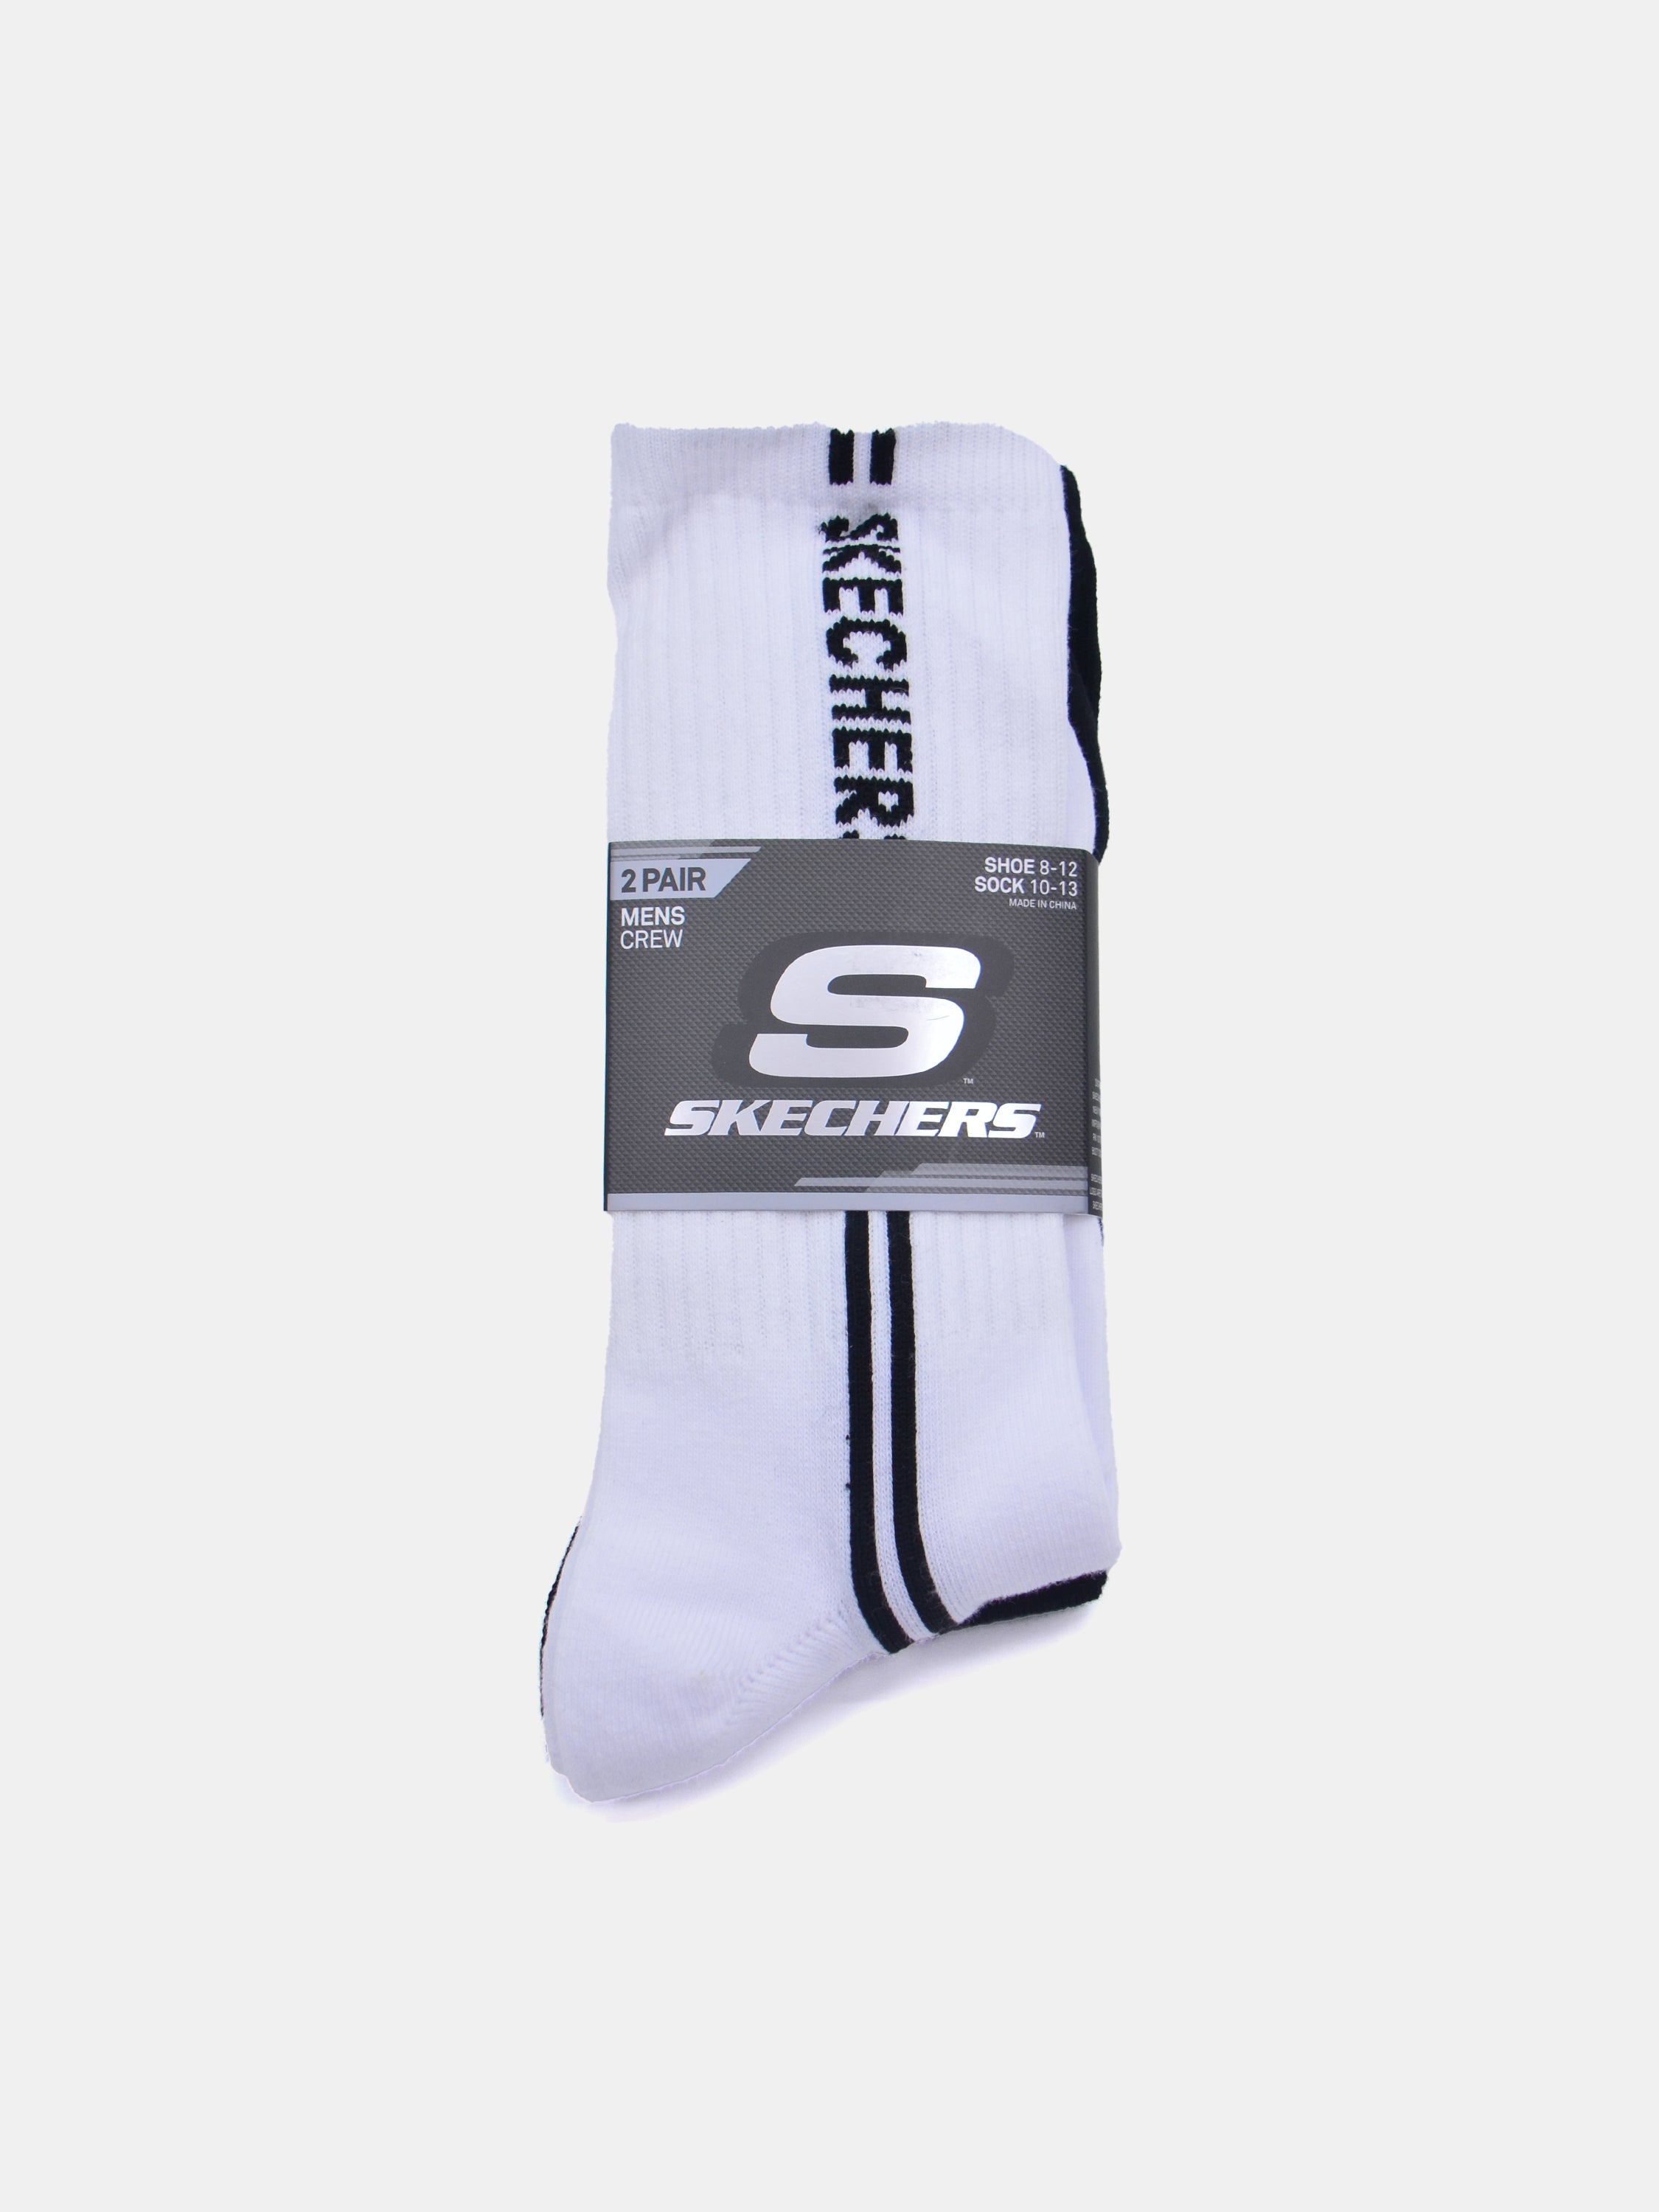 Skechers Men Crew Socks (2 Pack) #color_Multi